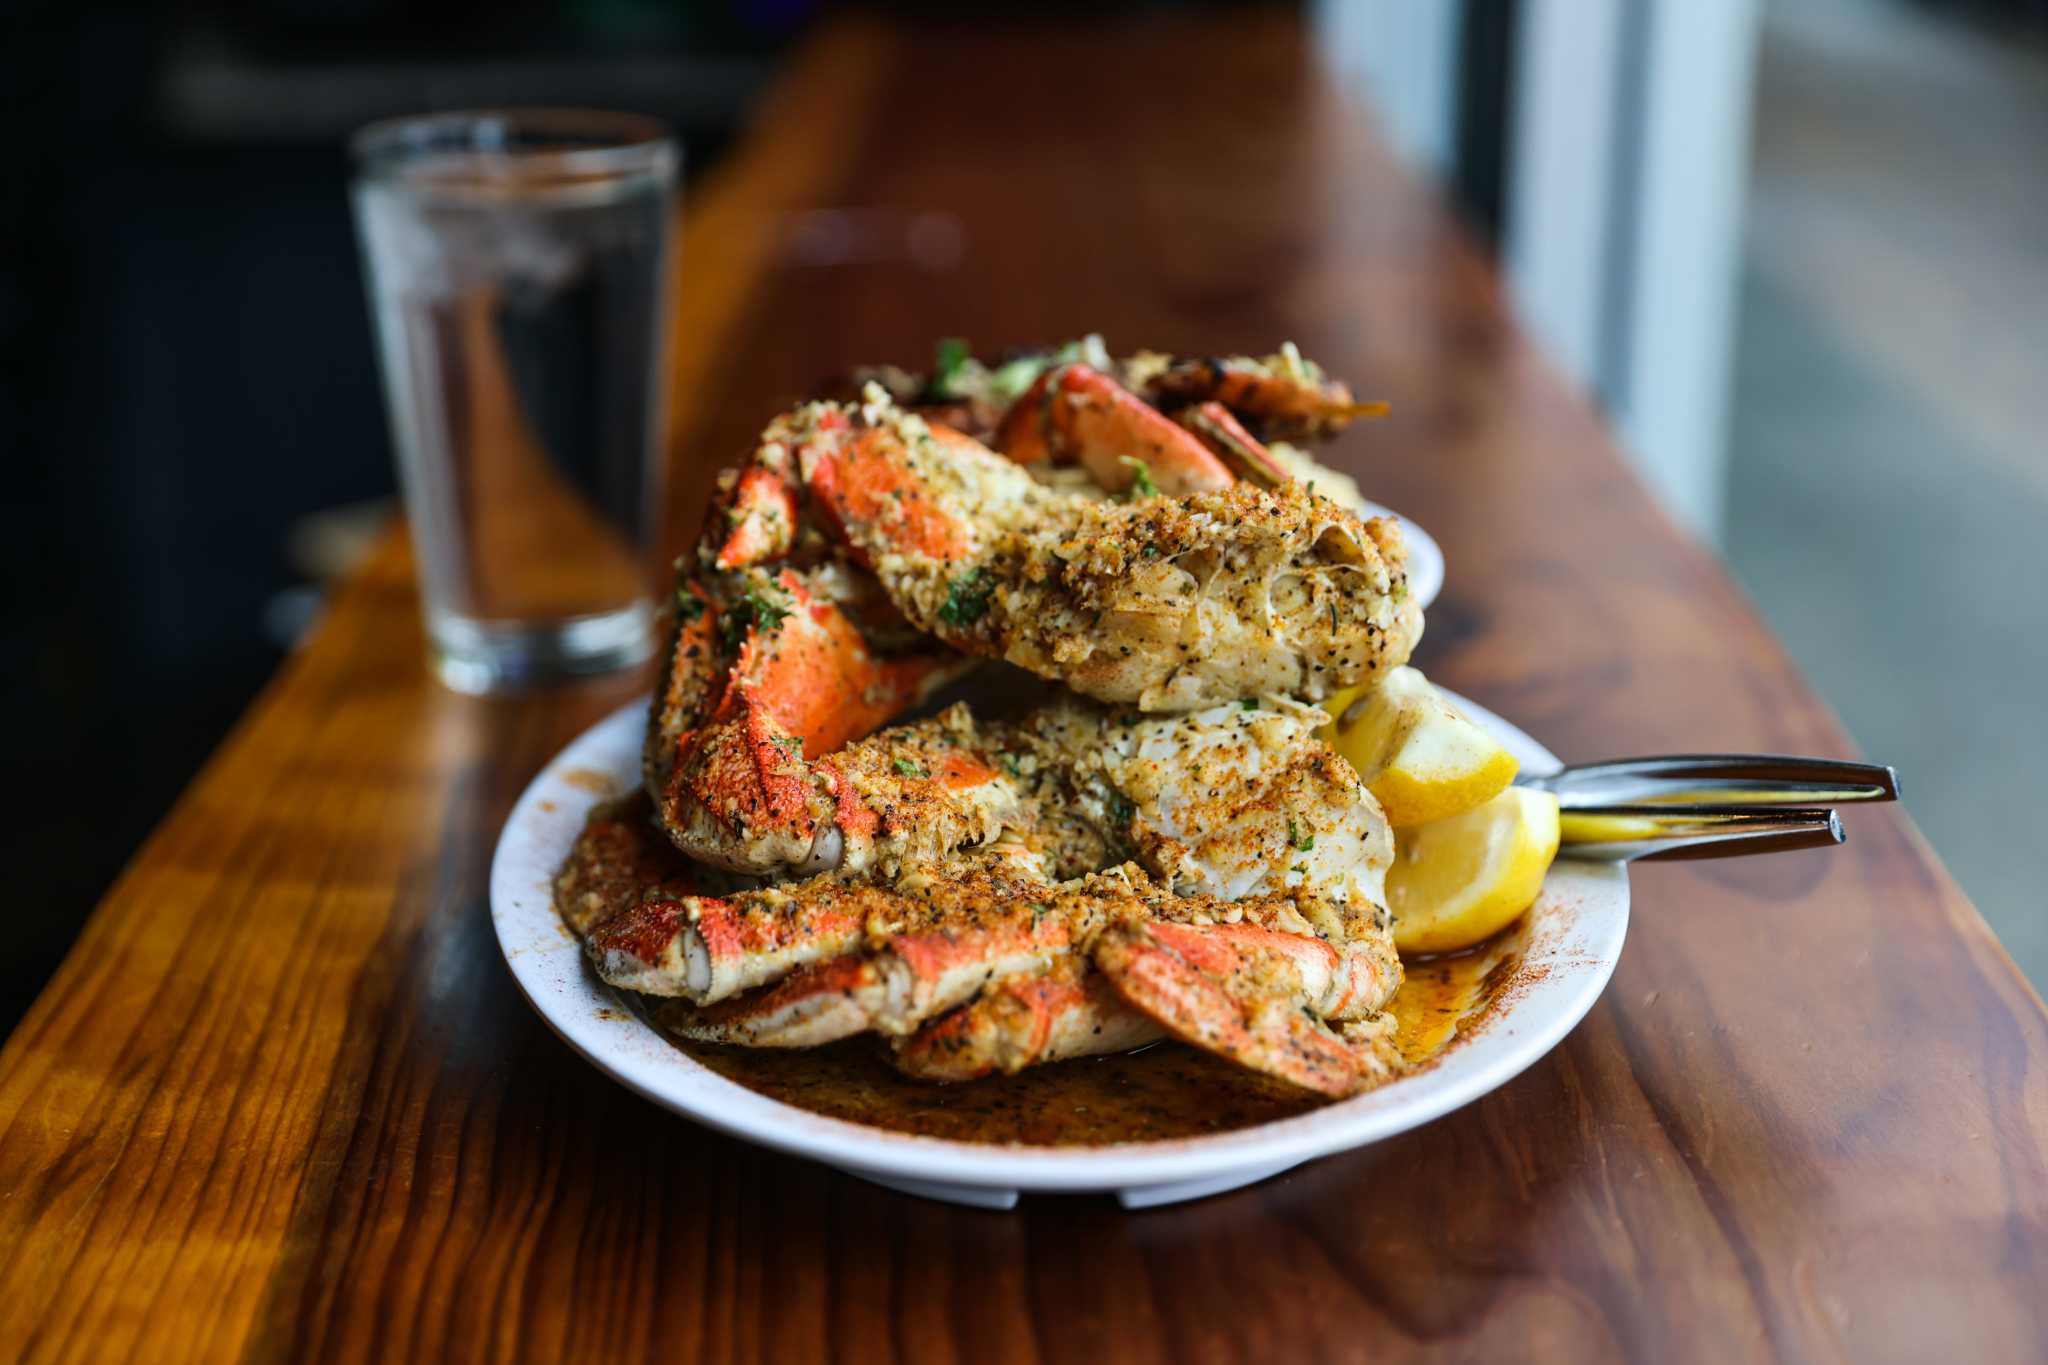 Dungeness蟹已上市，这里有供应它的湾区餐厅。